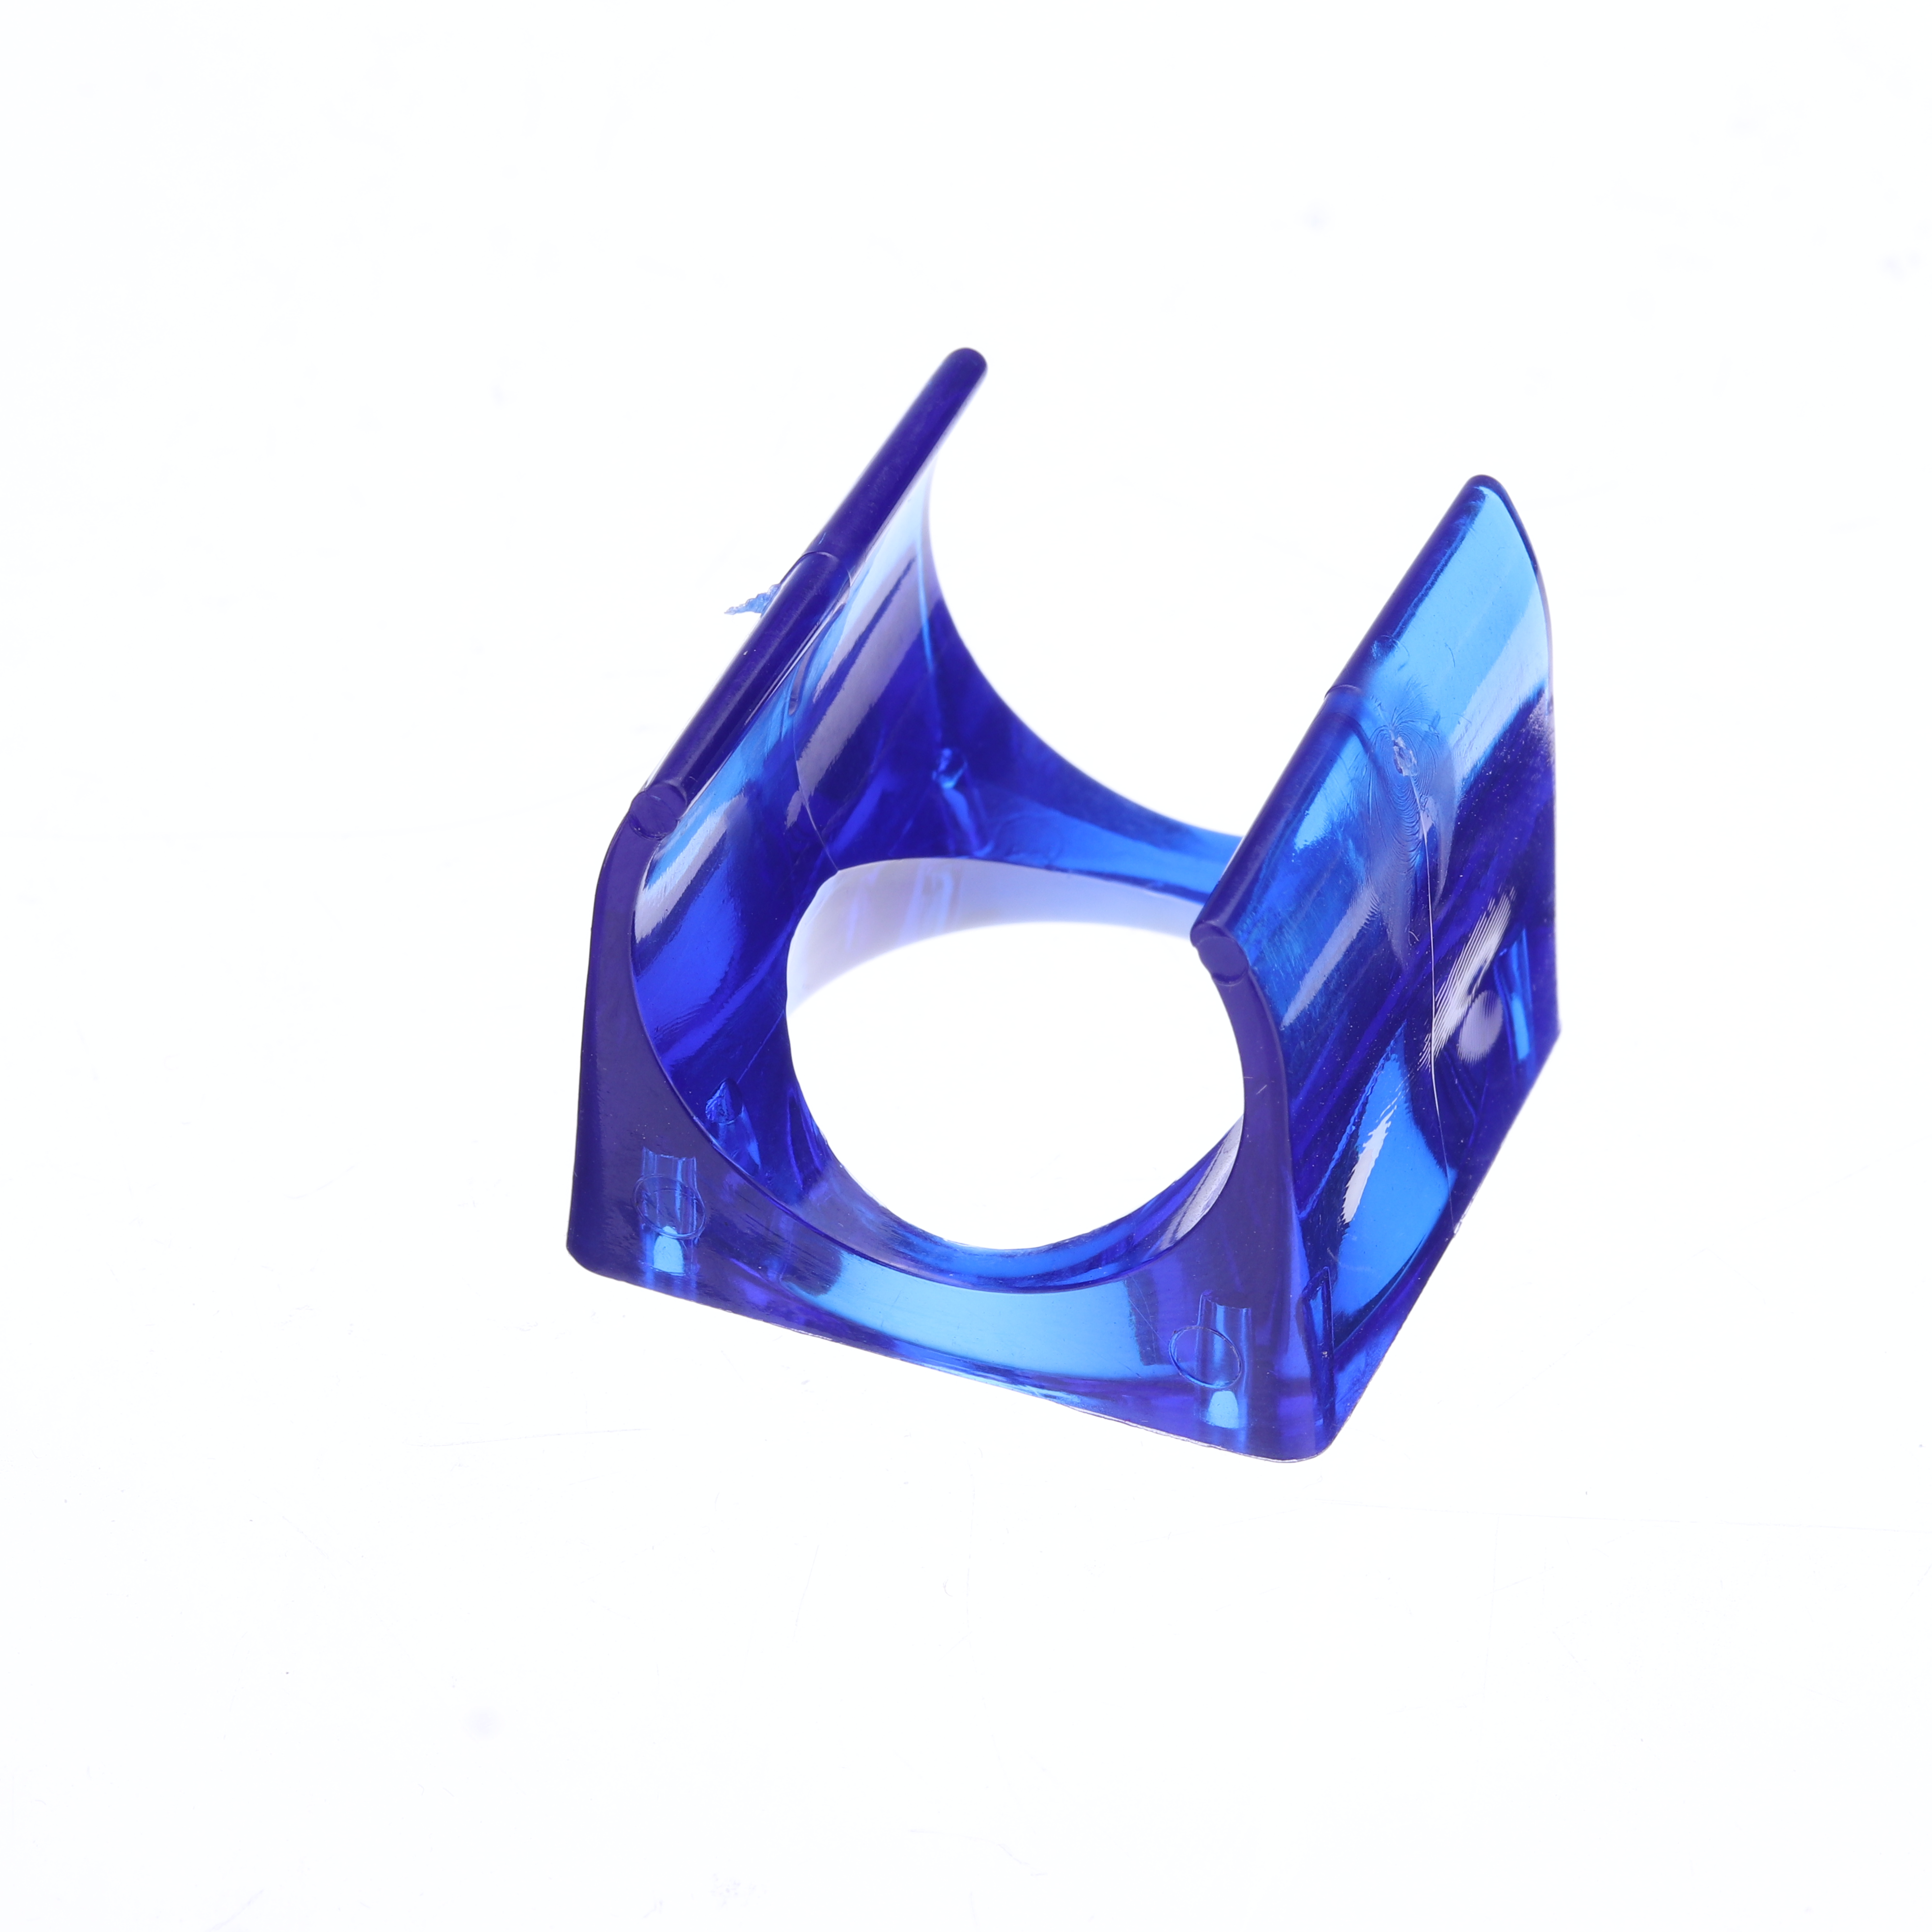 V5-25mm-Diameter-Injection-Molding-3010-Cooling-Fan-Fan-Cover-for-Extruder-3D-printer-1468725-2